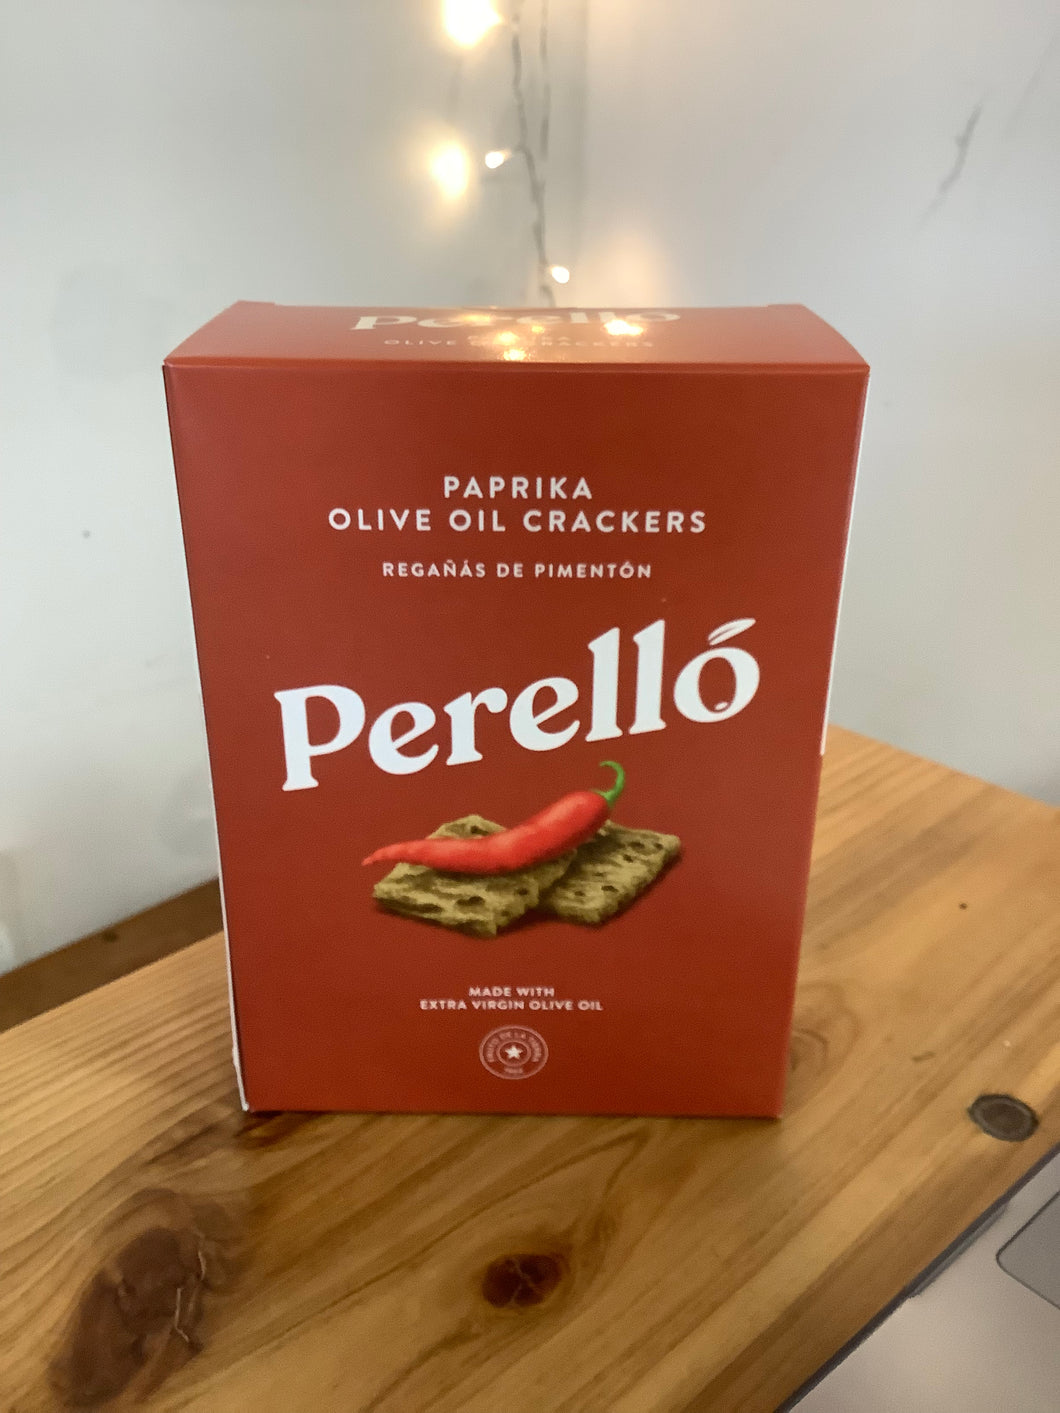 Perello Paprika Olive Oil Crackers